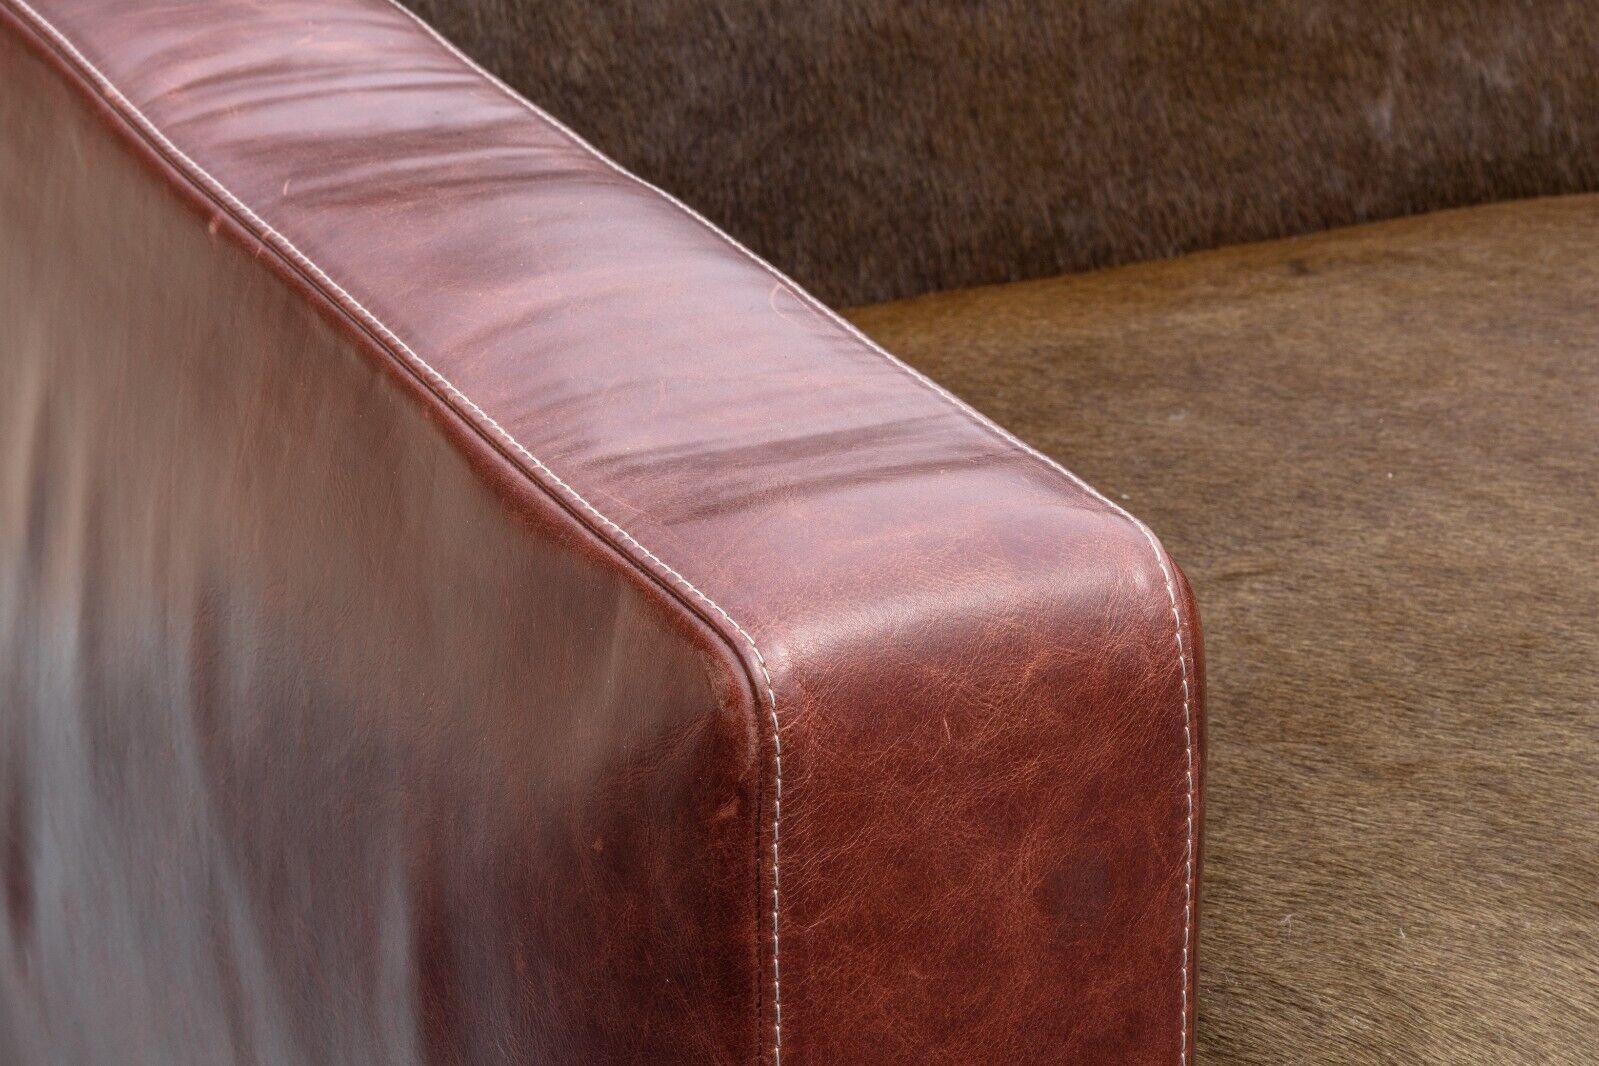 20th Century Contemporary Modern Poltrona Frau Peter Marino Linea A Leather and Hide Sofa